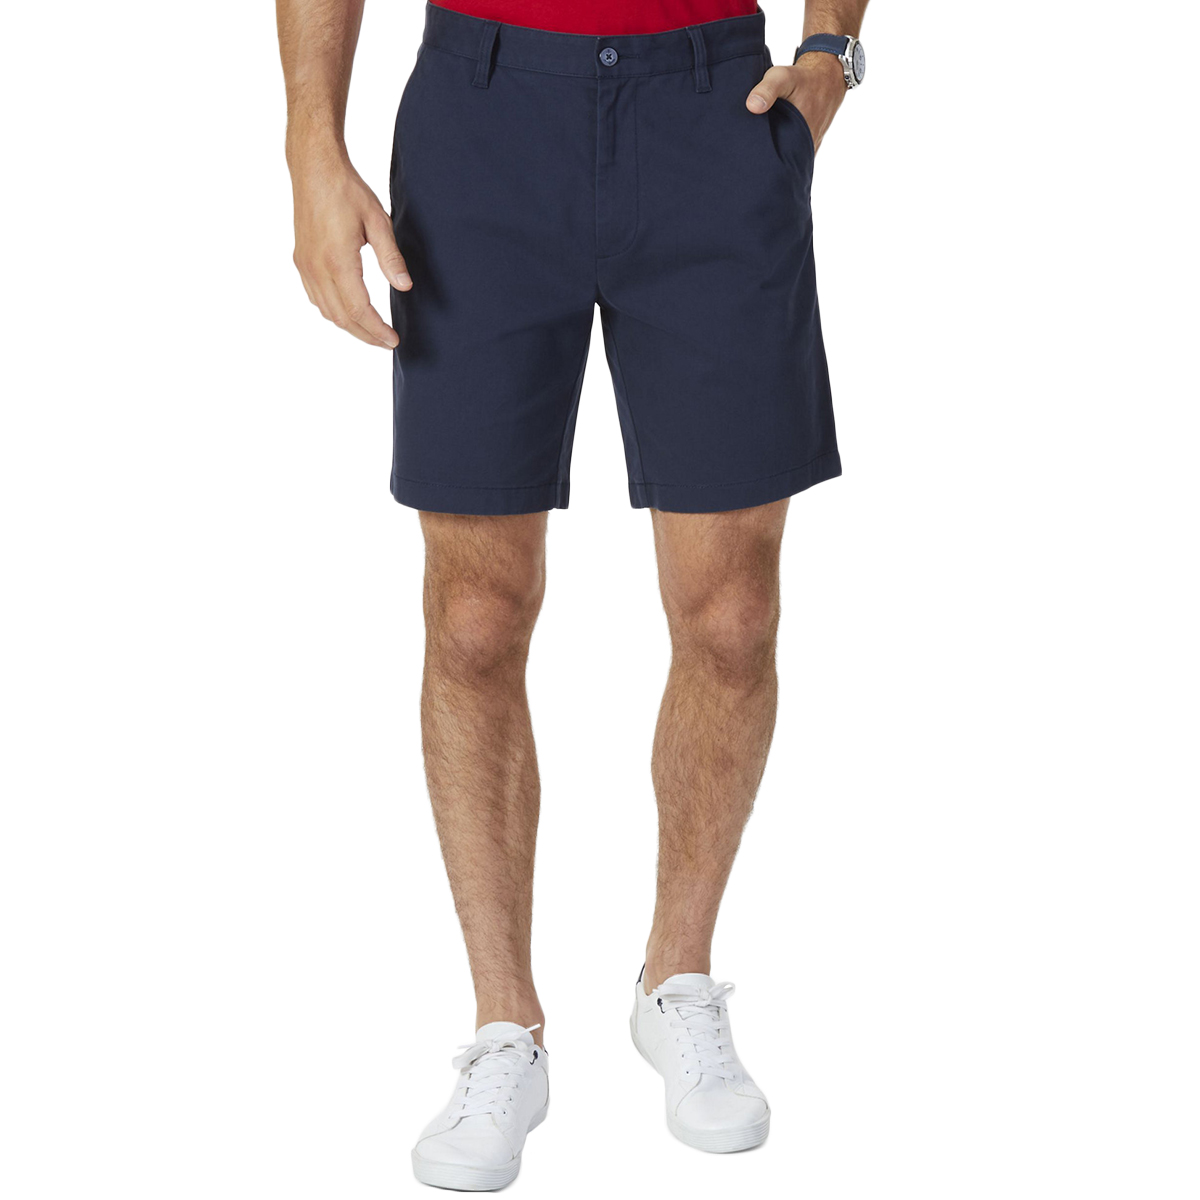 Nautica Men's Classic Fit Deck Shorts - Blue, 38